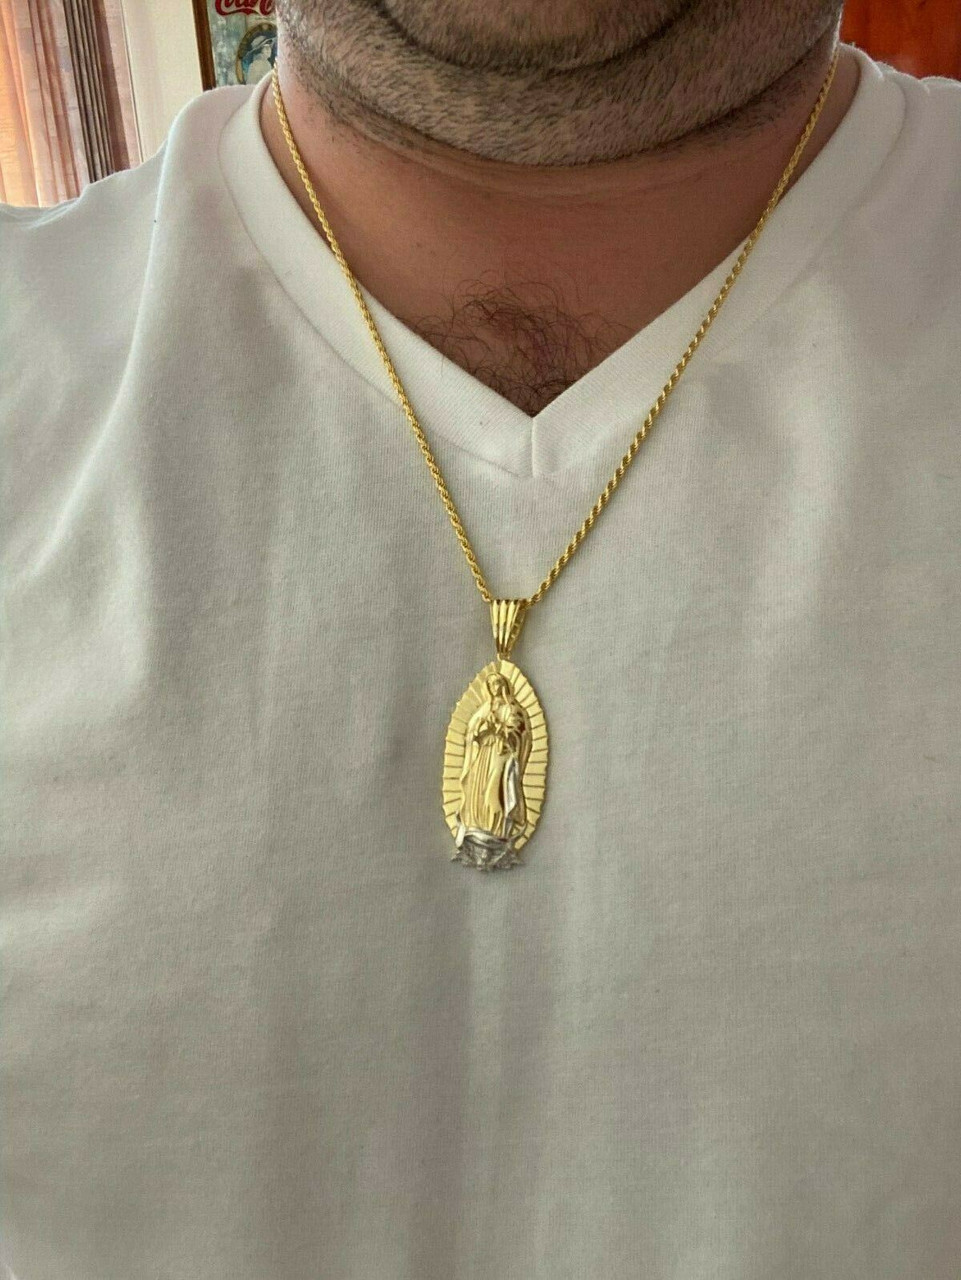 Catholic Christian Jewelry Cameo Design Virgin Mary Pendant Charming  Necklace | eBay